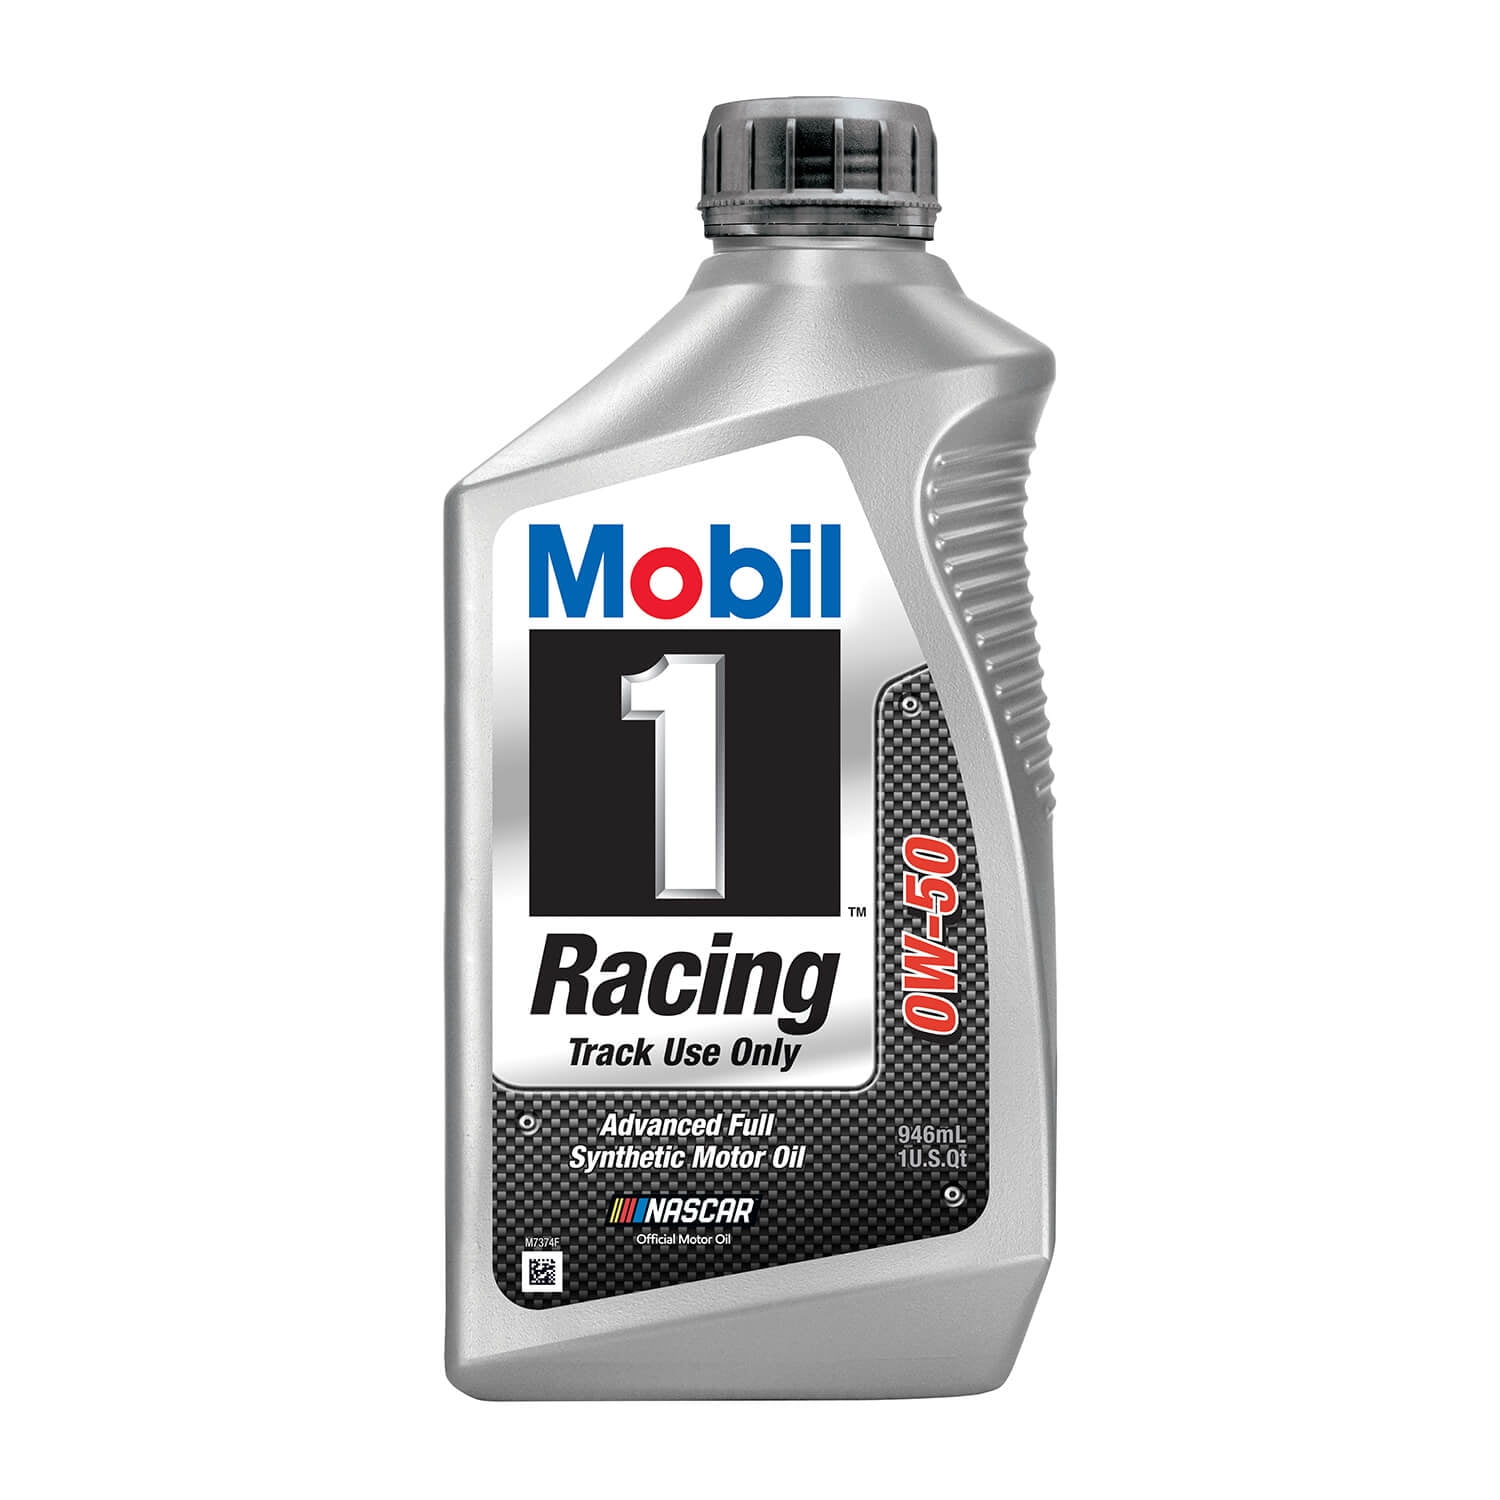 Mobil 1 Racing Full Synthetic Motor Oil 0W-50, 1 qt - Walmart.com